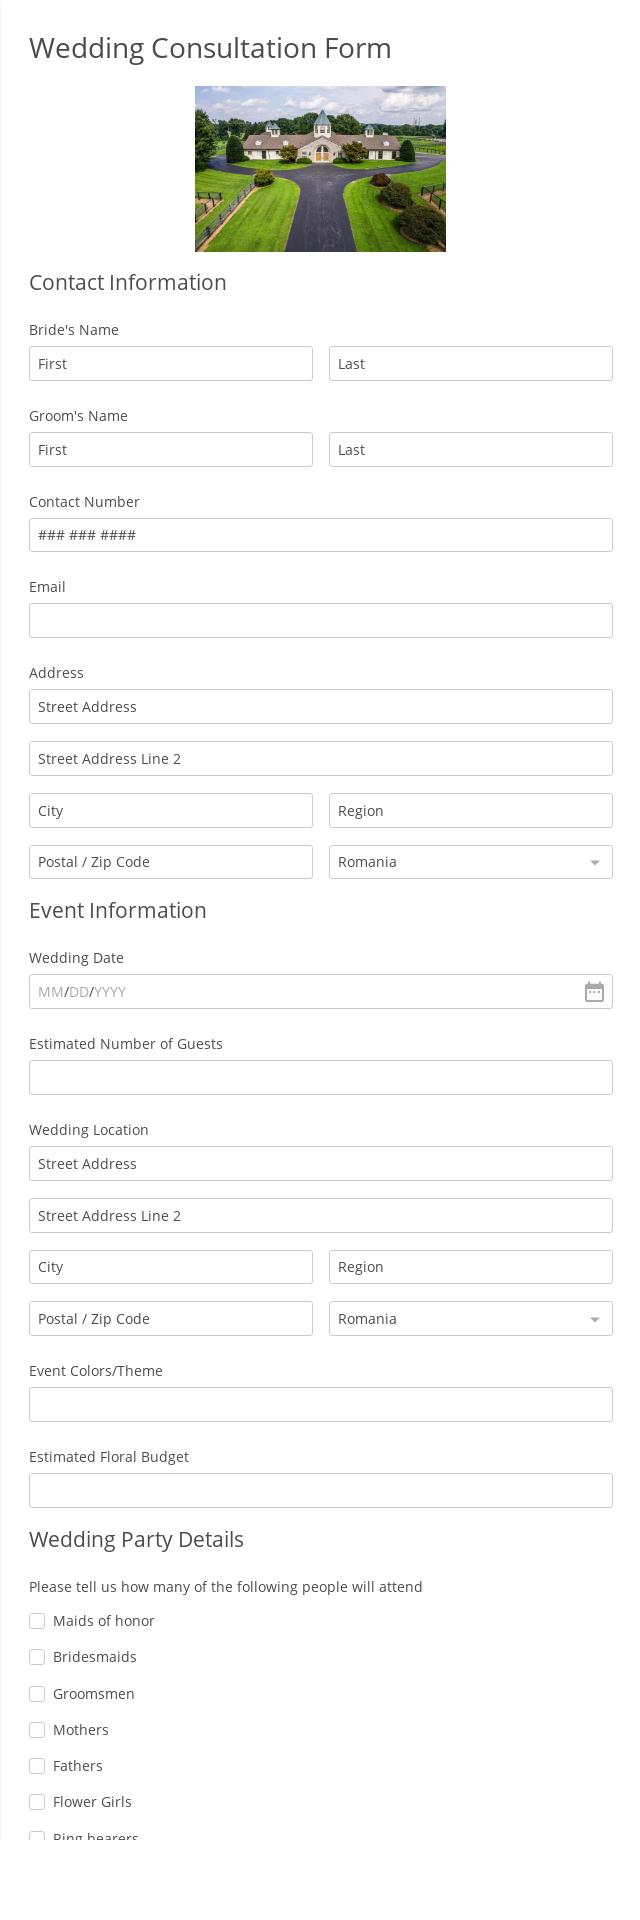 Wedding Consultation Form